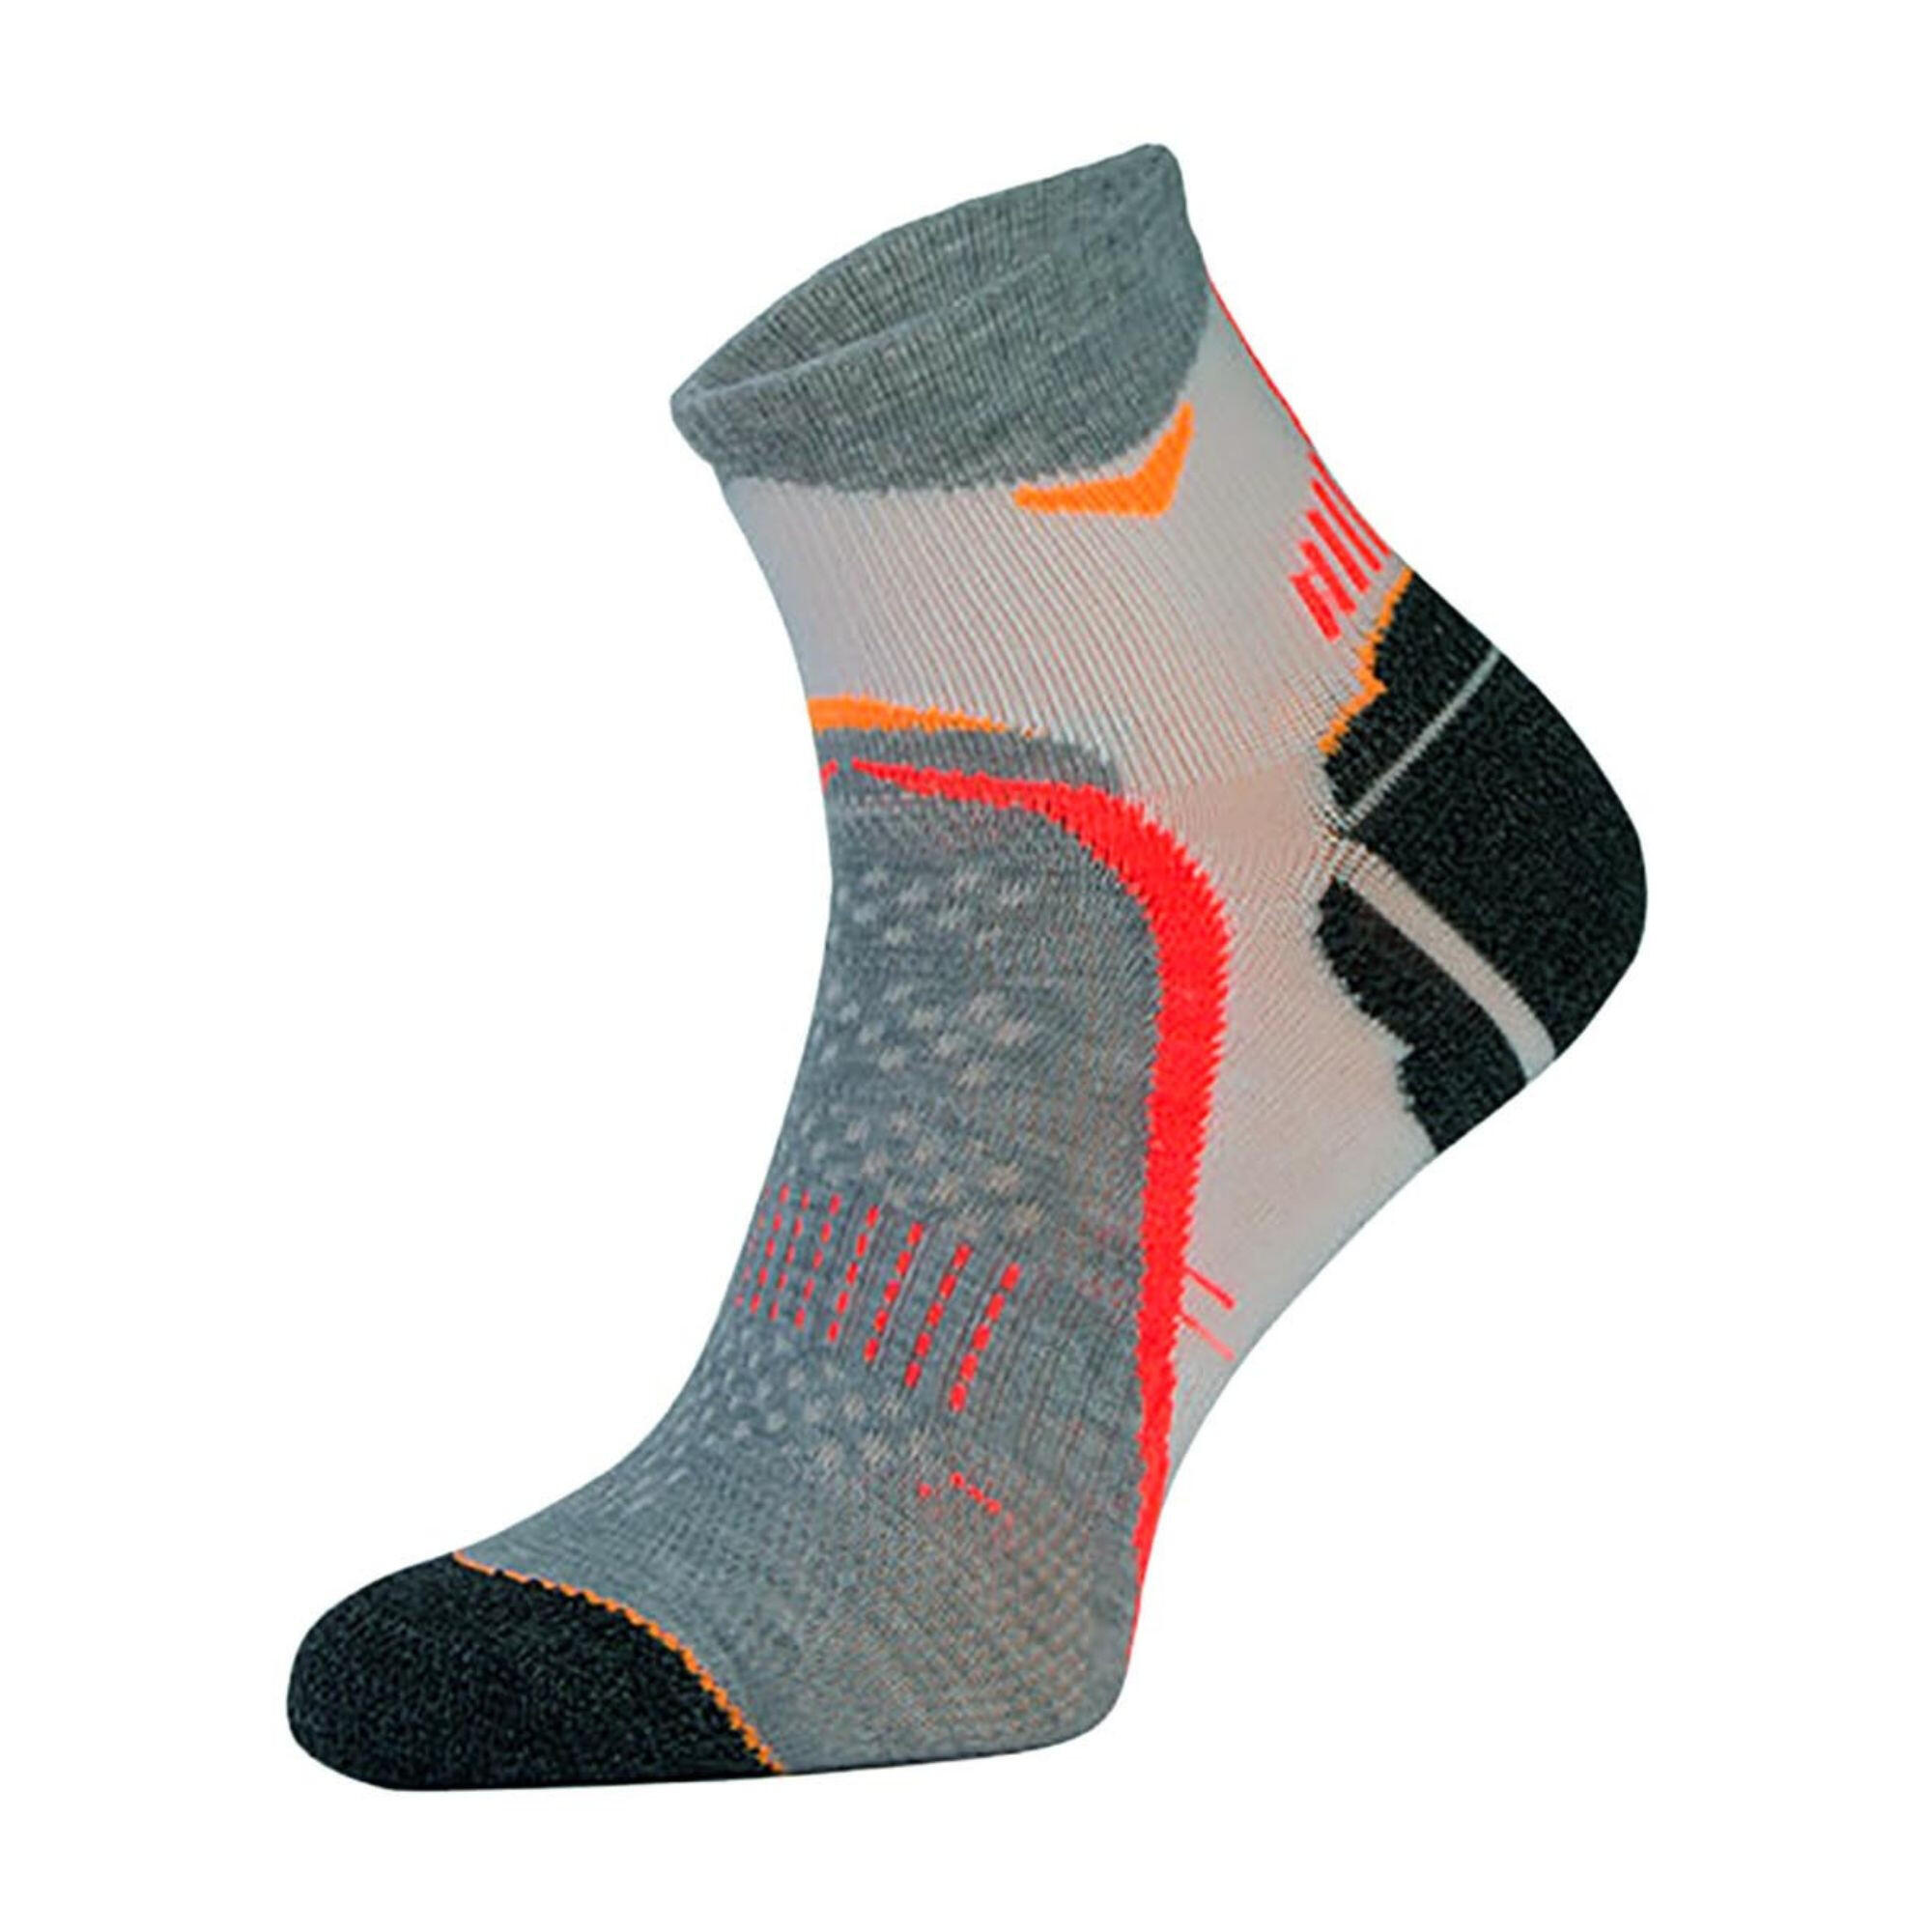 Drytex Yarn Arch Support Durable Running Jogging Socks 1/3